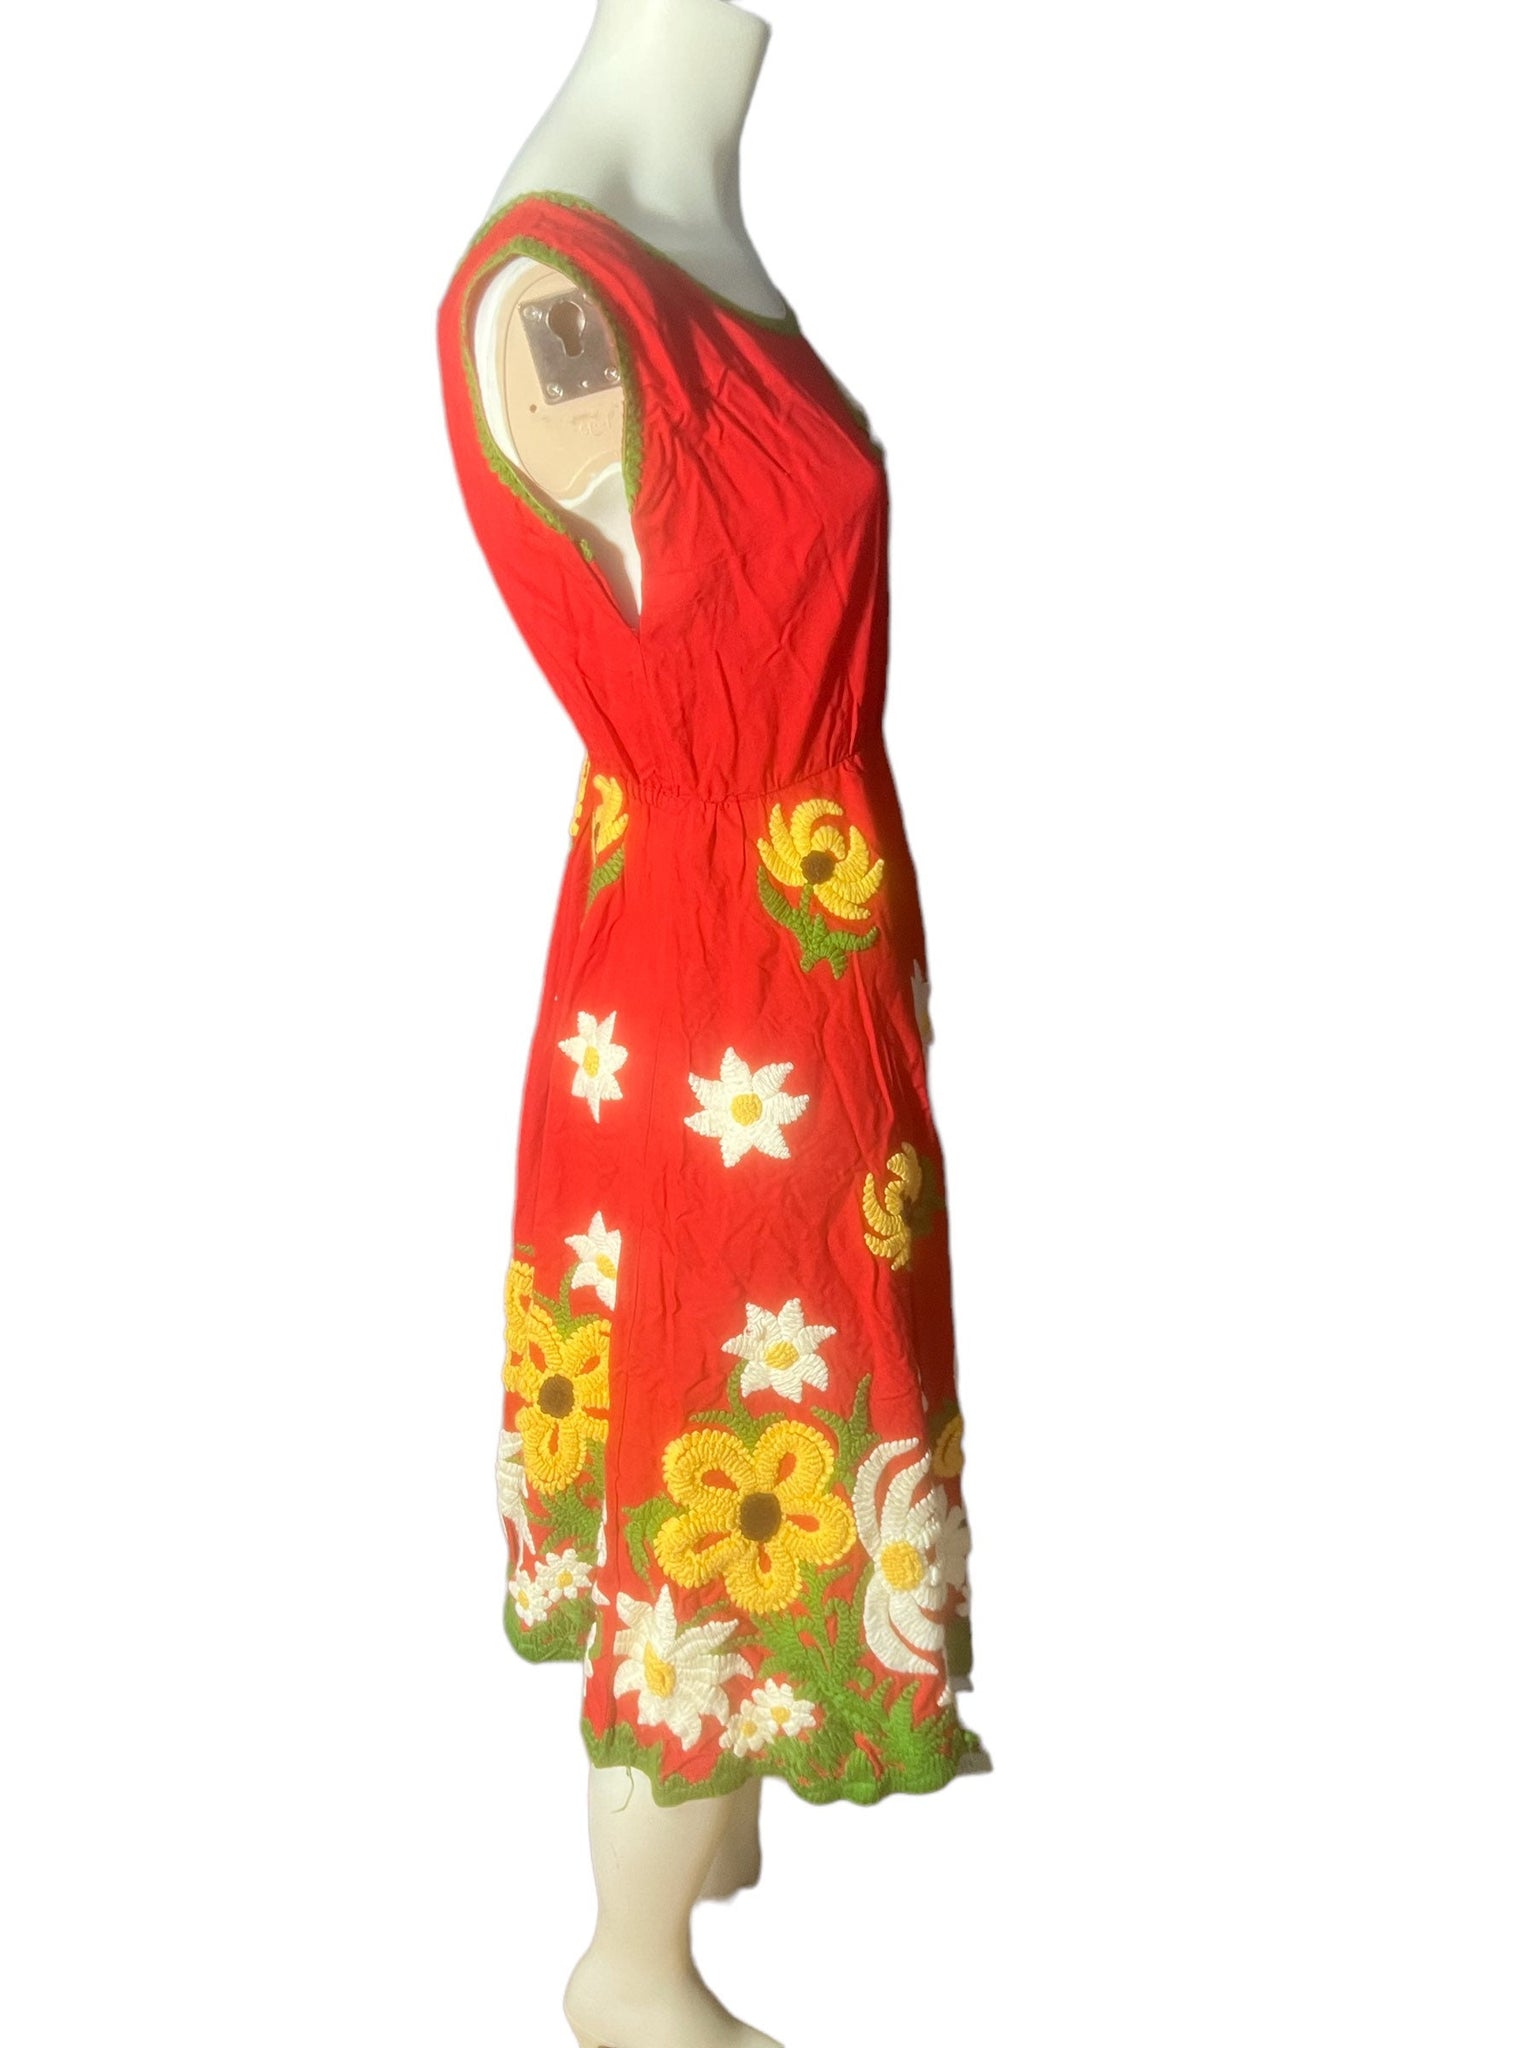 Vintage 1950's embroidered flower sun dress M